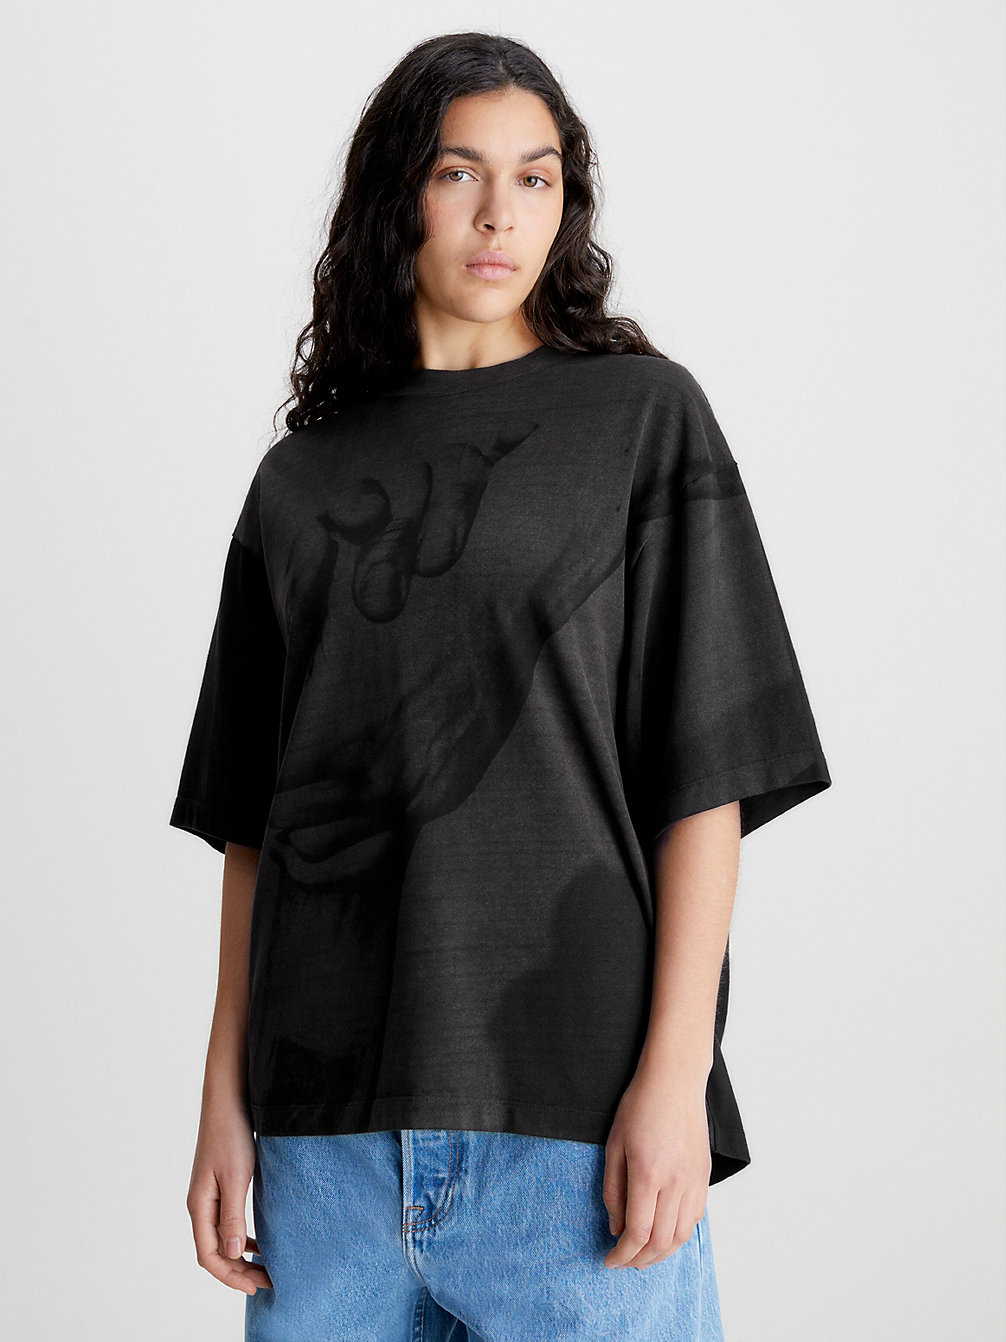 BLACK BEAUTY Unisex Relaxed Printed T-Shirt - CK Standards undefined men Calvin Klein